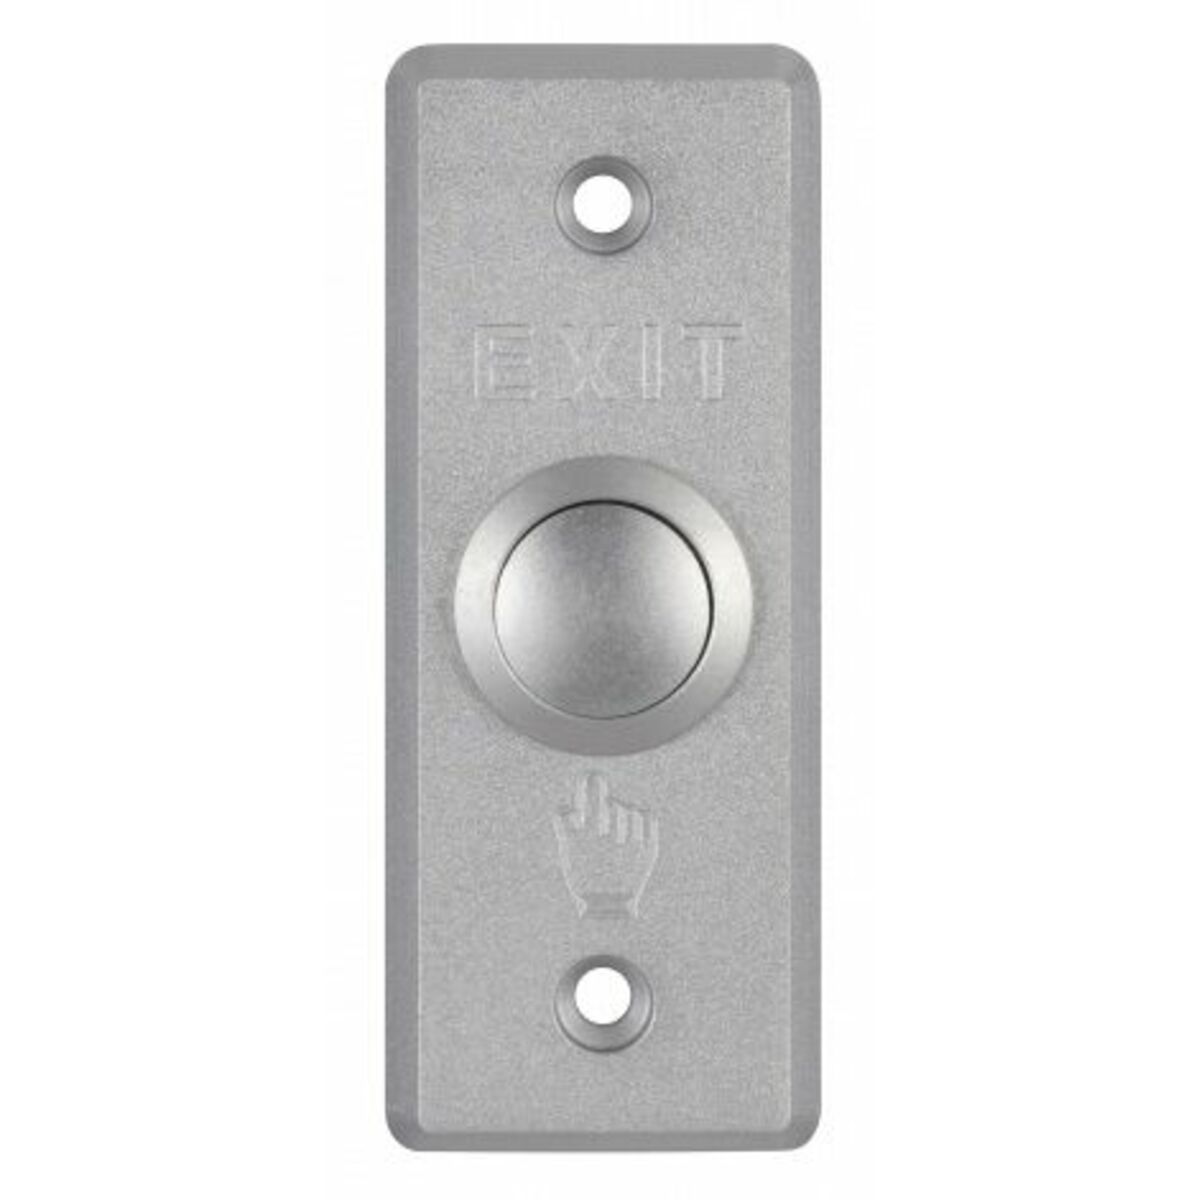 Кнопка выхода Hikvision DS-K7P02 (Цвет: Gray)